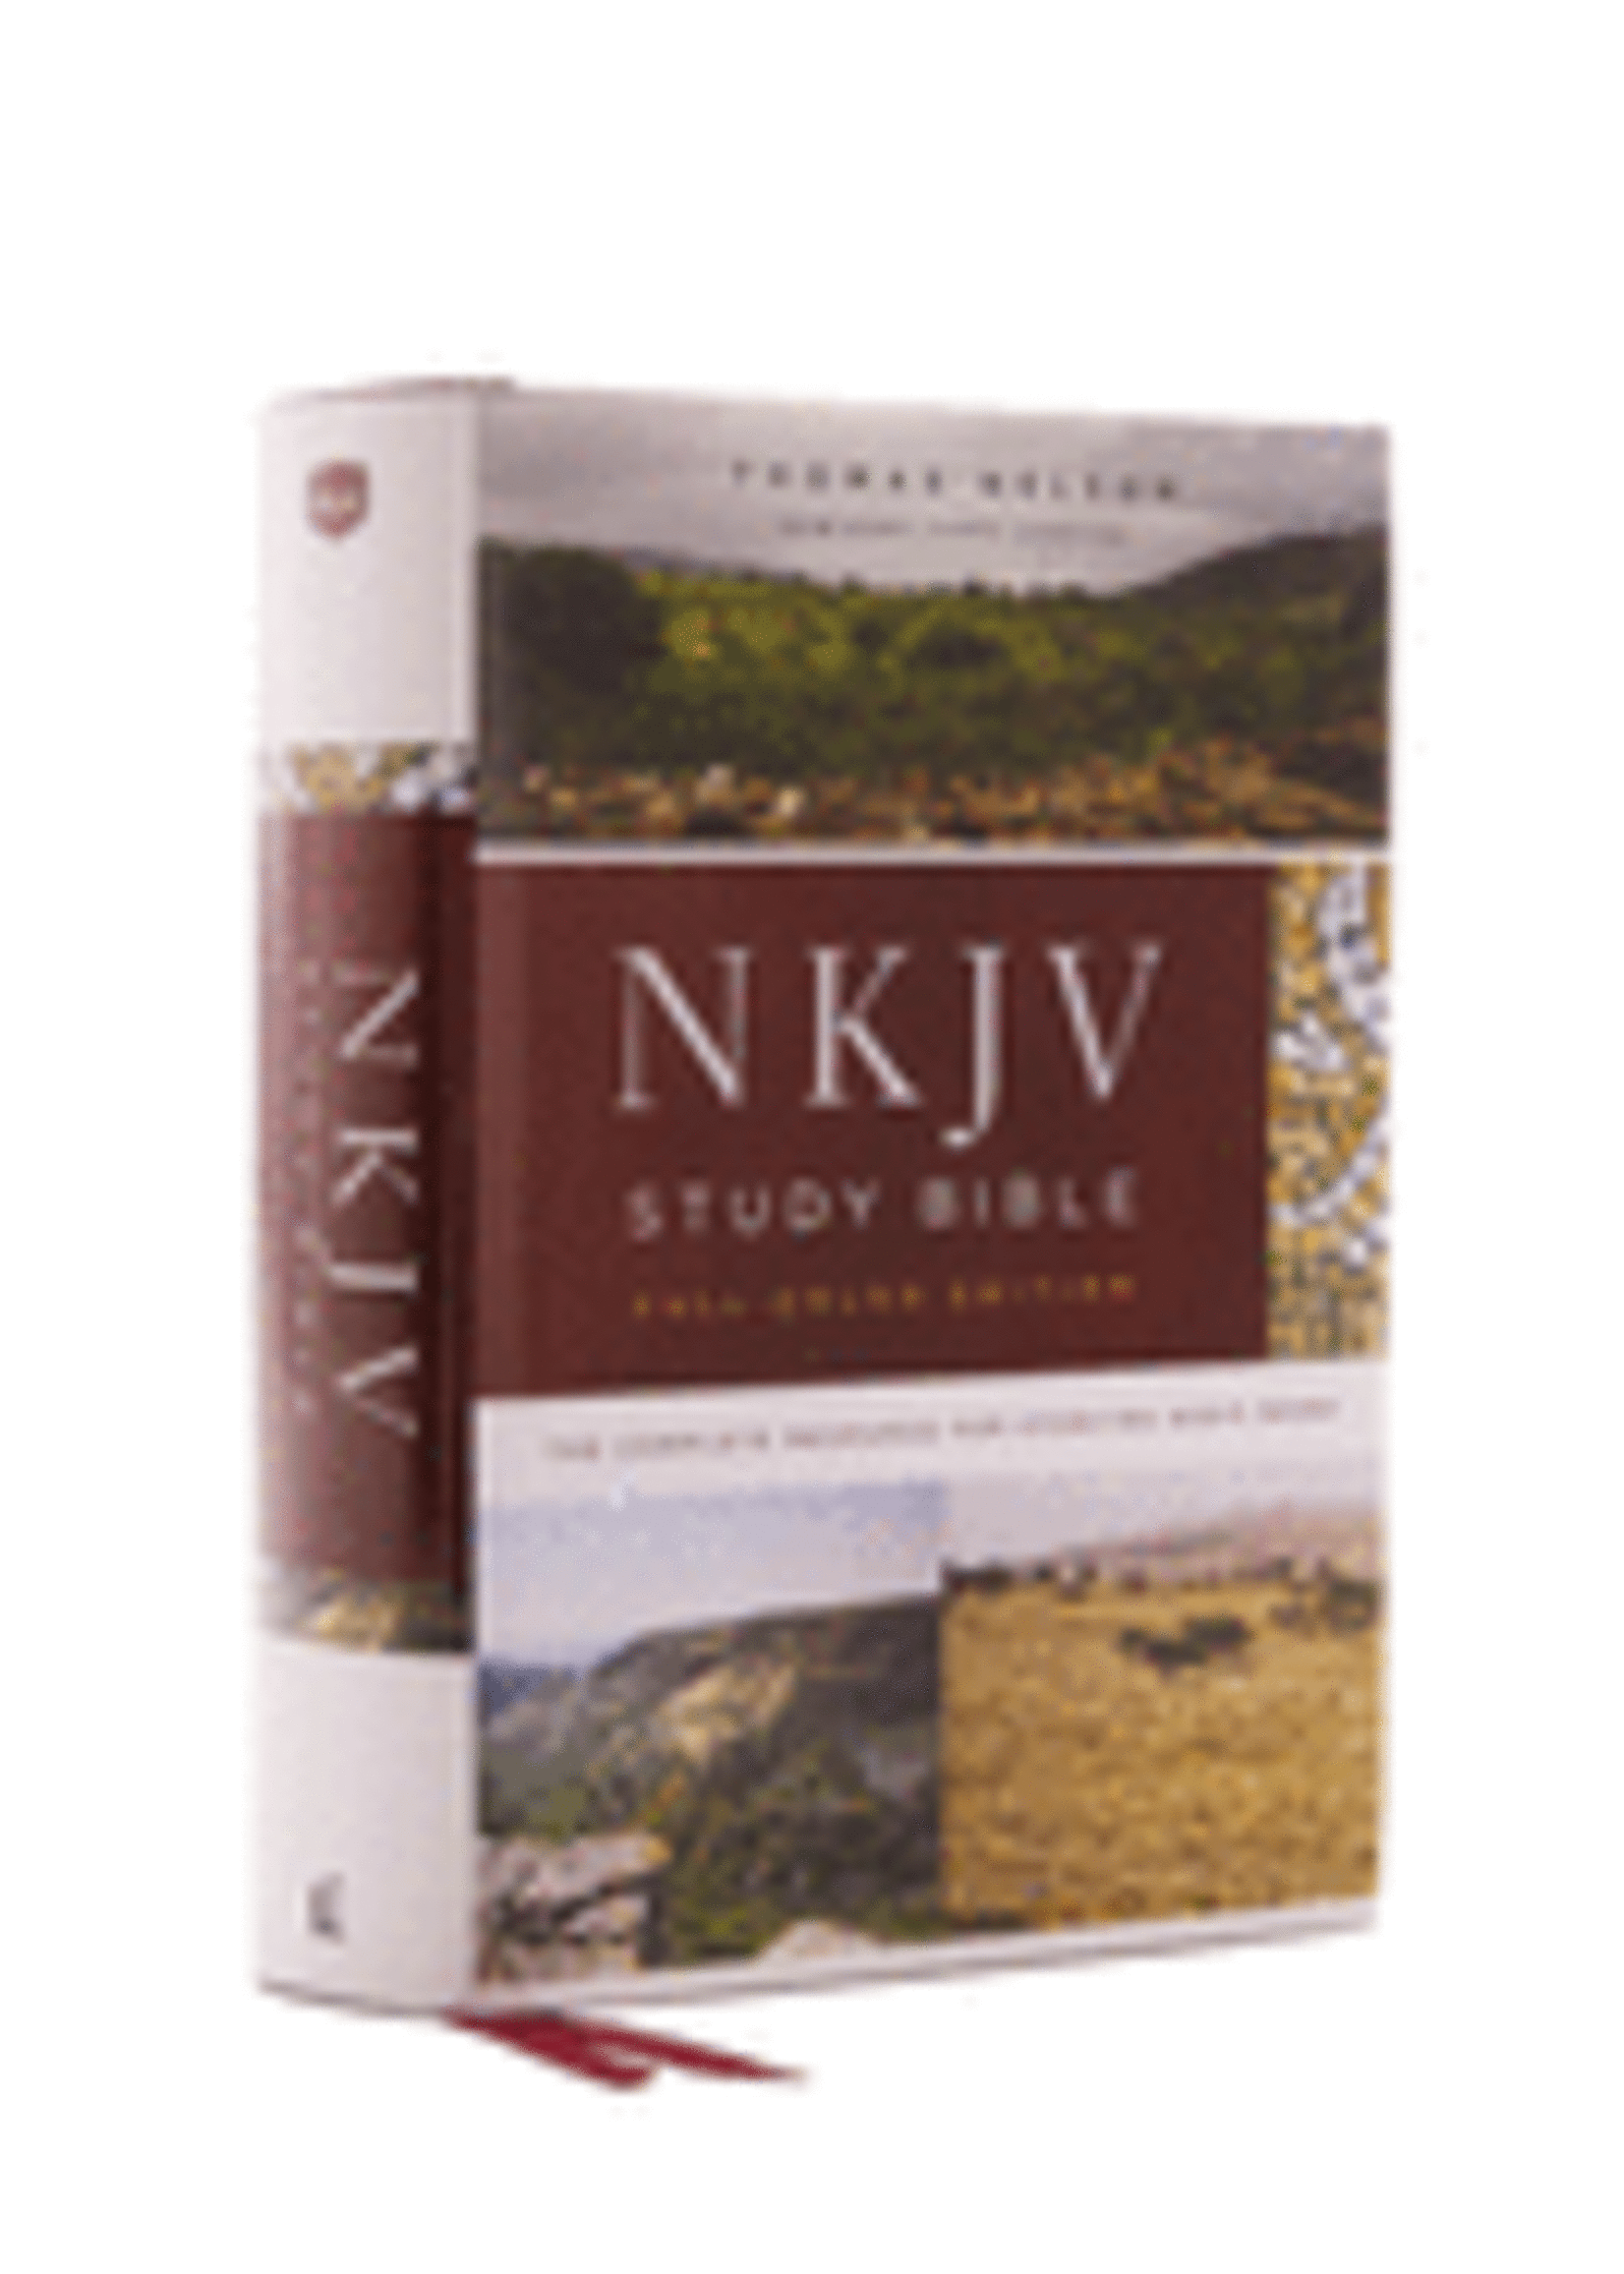 Thomas Nelson NKJV Full Color Study Bible: Hardcover - Thomas Nelson